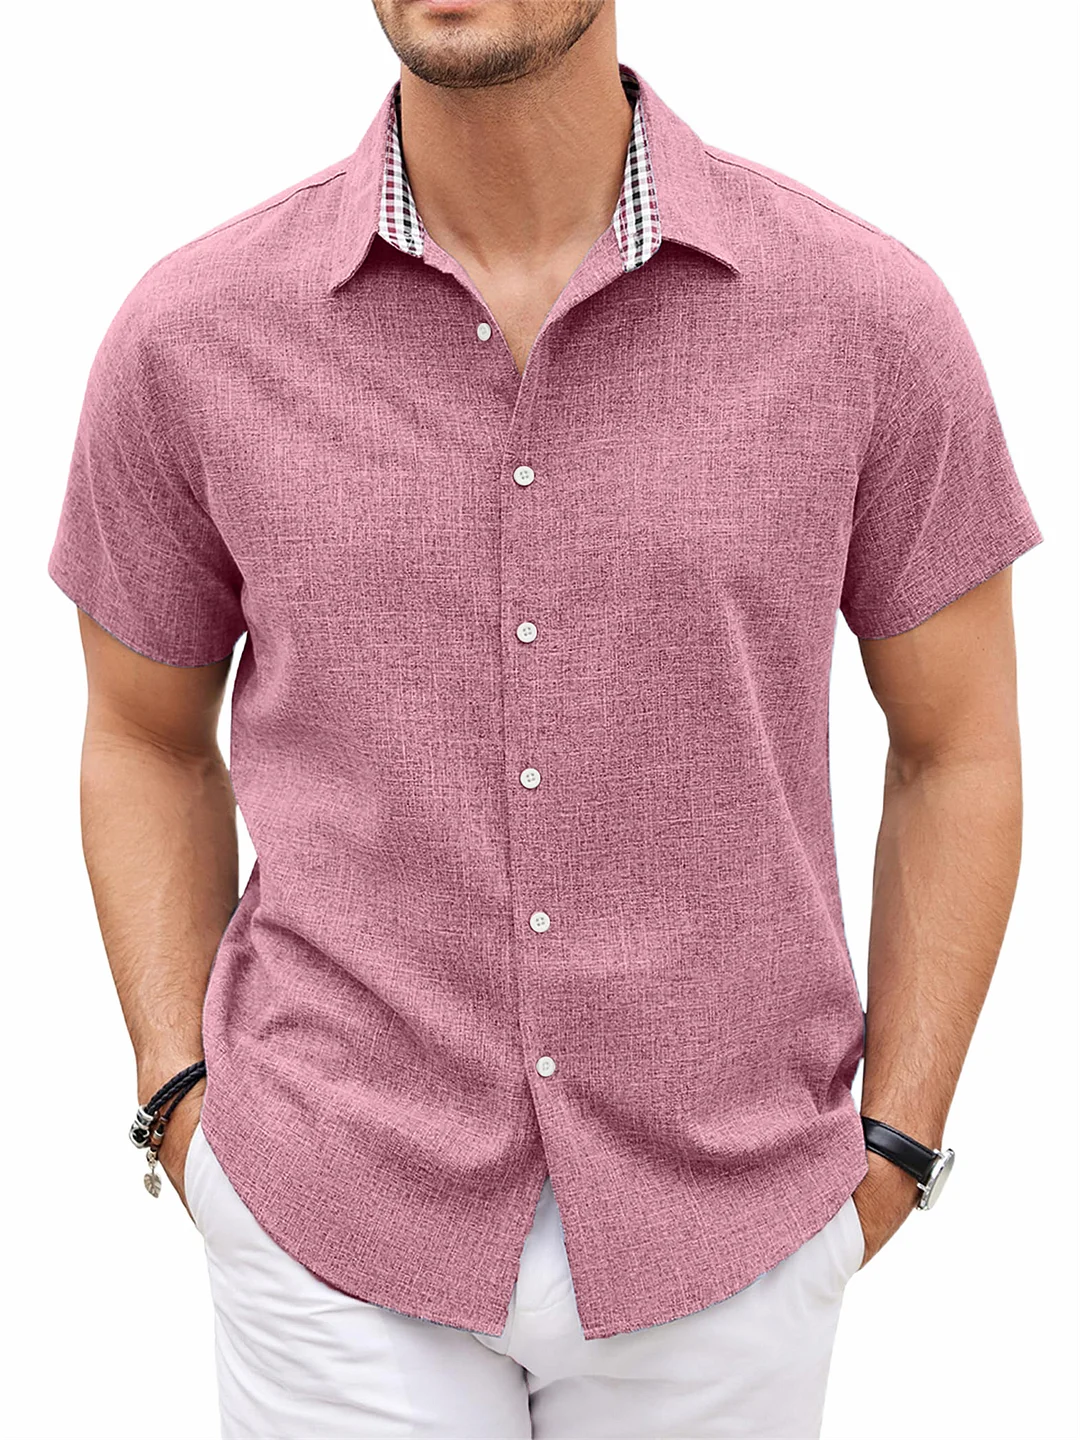 Suitmens Mens Linen Shirt Short Sleeve Button Down Shirts Casual Plaid Collar Summer Beach Shirts